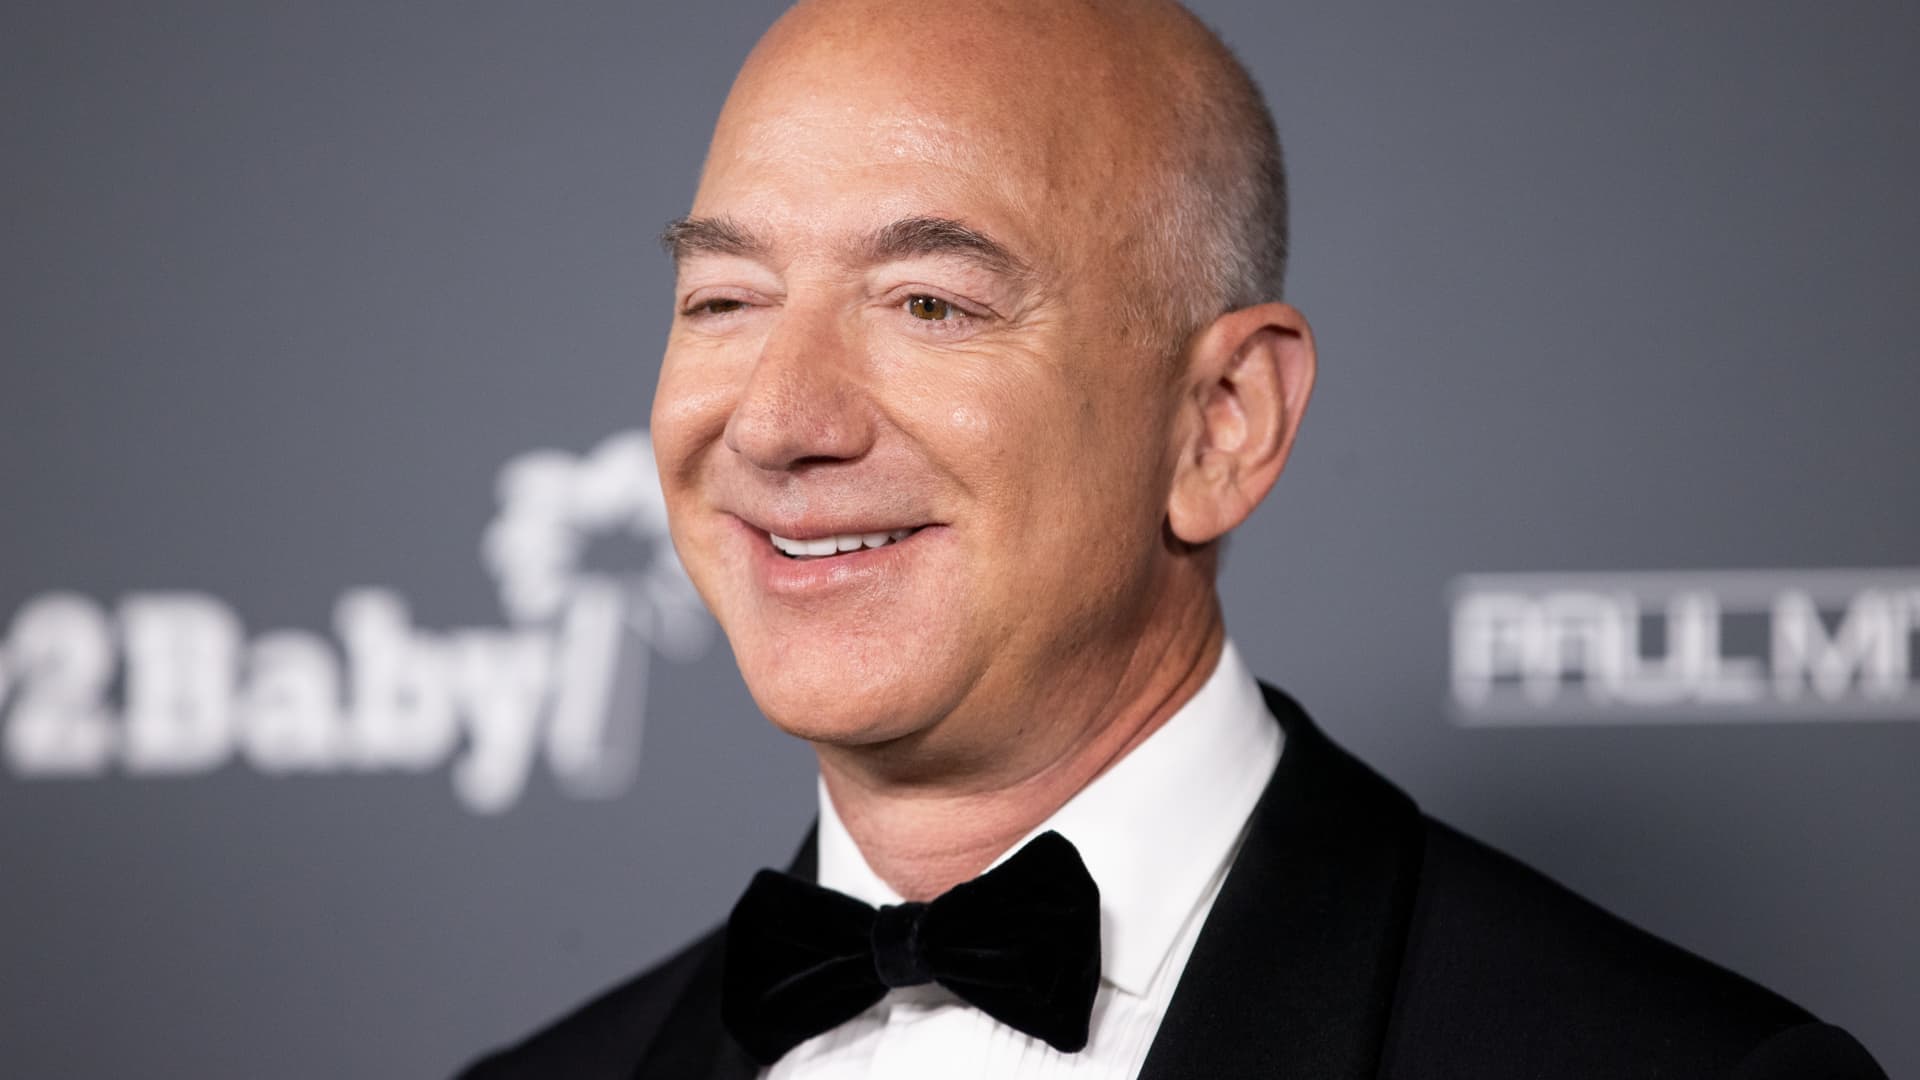 Jeff Bezos sells more than $2 billion in Amazon stock